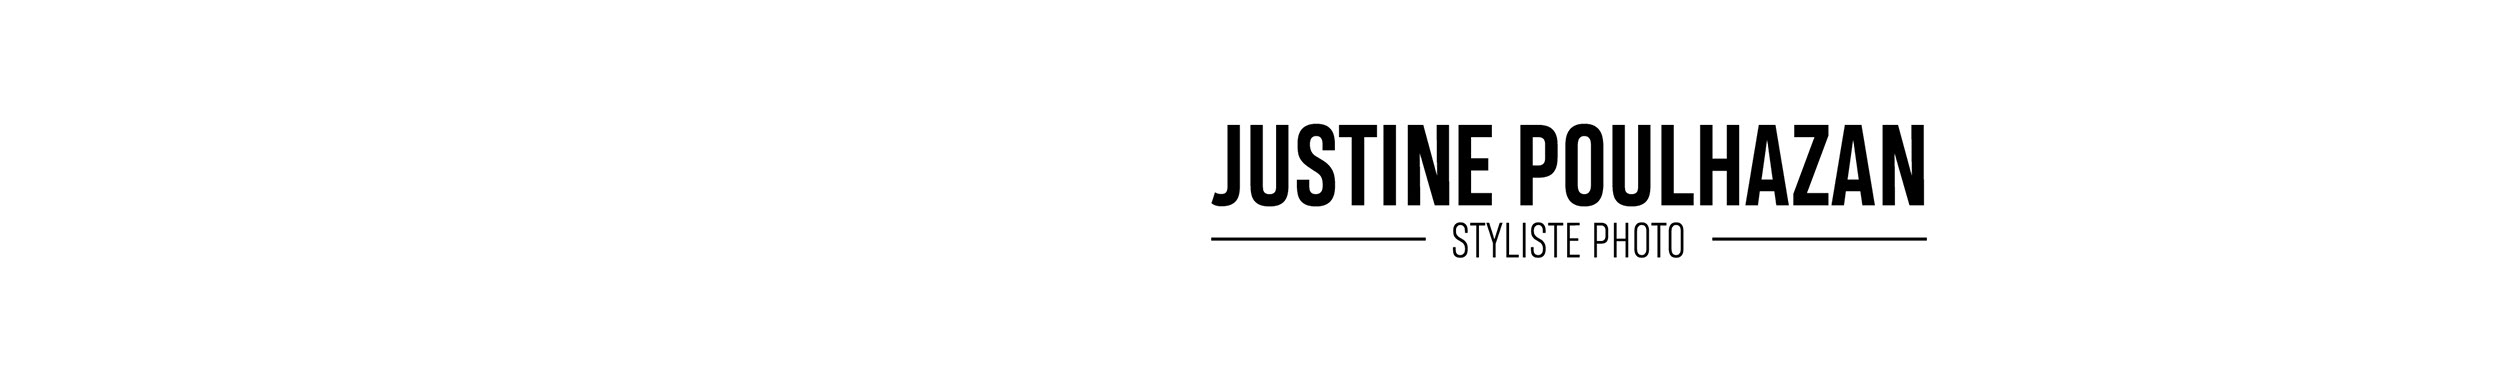 Justine Poulhazan's profile banner